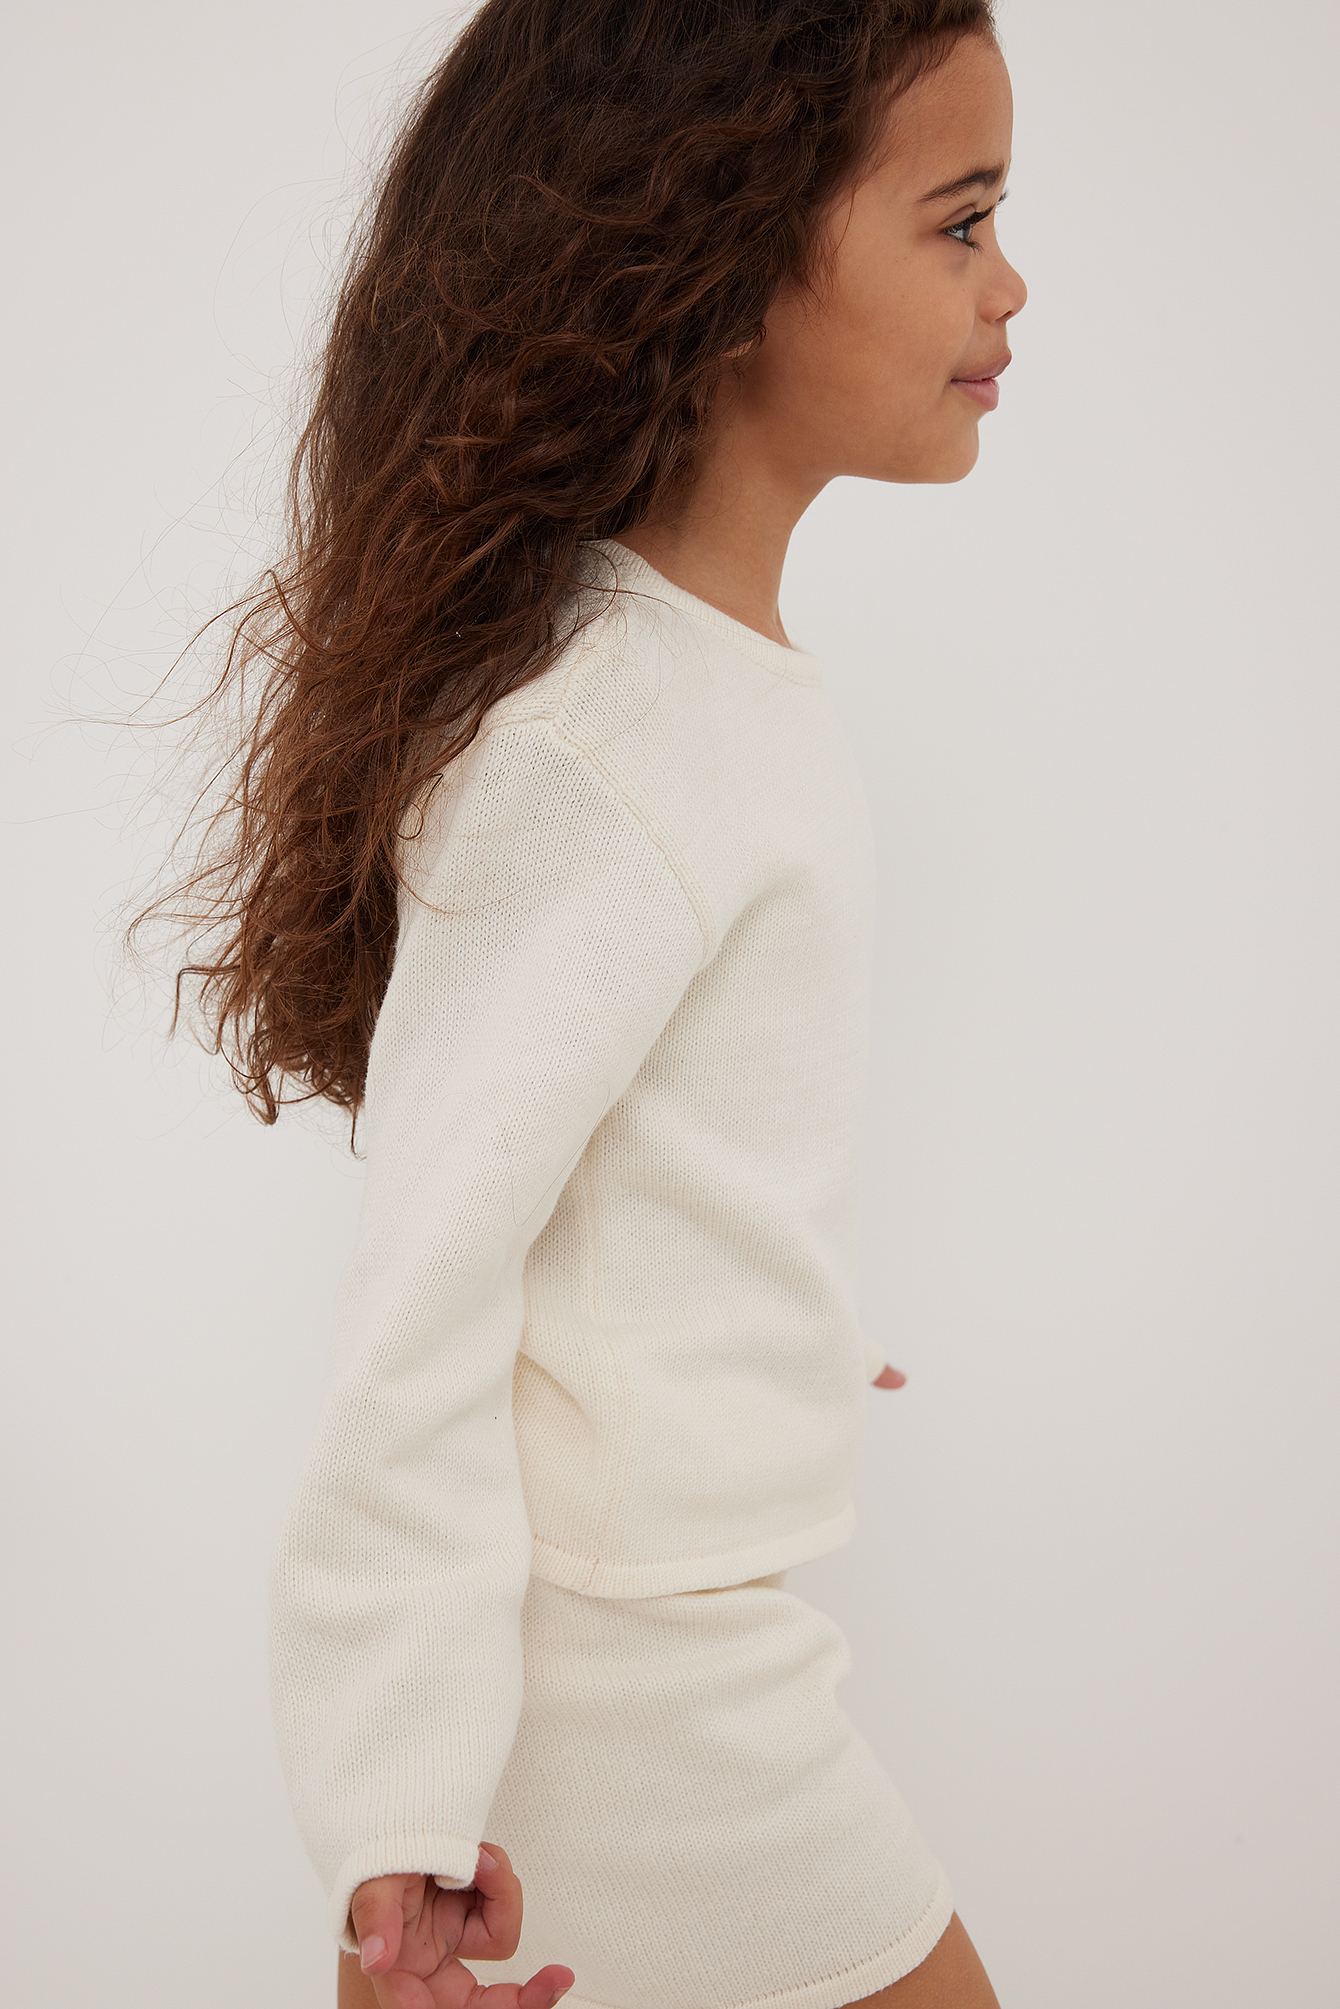 Lojsan Wallin x NA-KD Light Knitted Mini Top - Offwhite